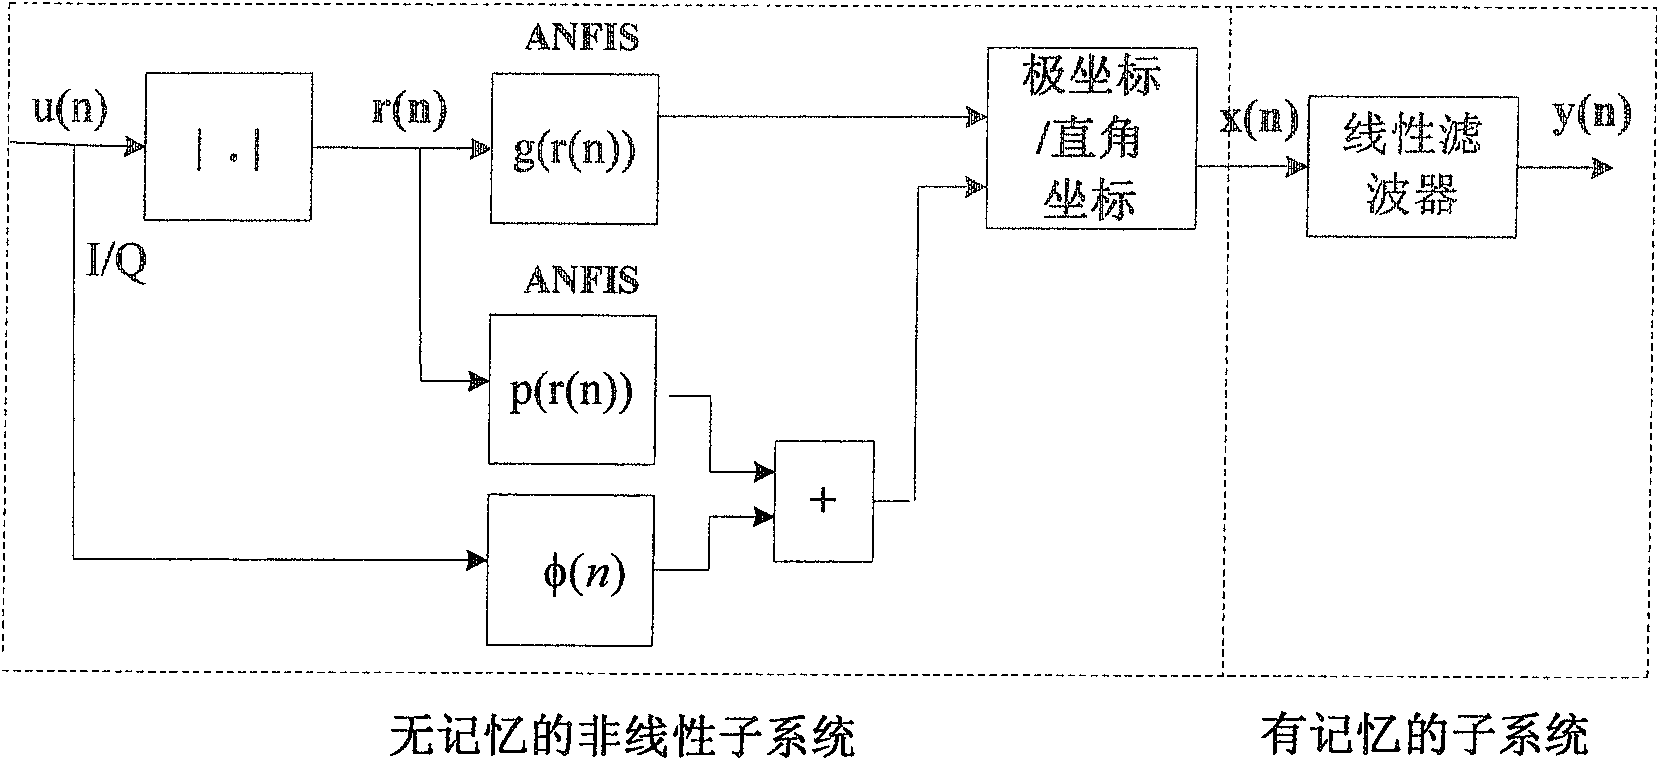 Power amplifier predistortion method of Hammerstein model based on fuzzy neural network